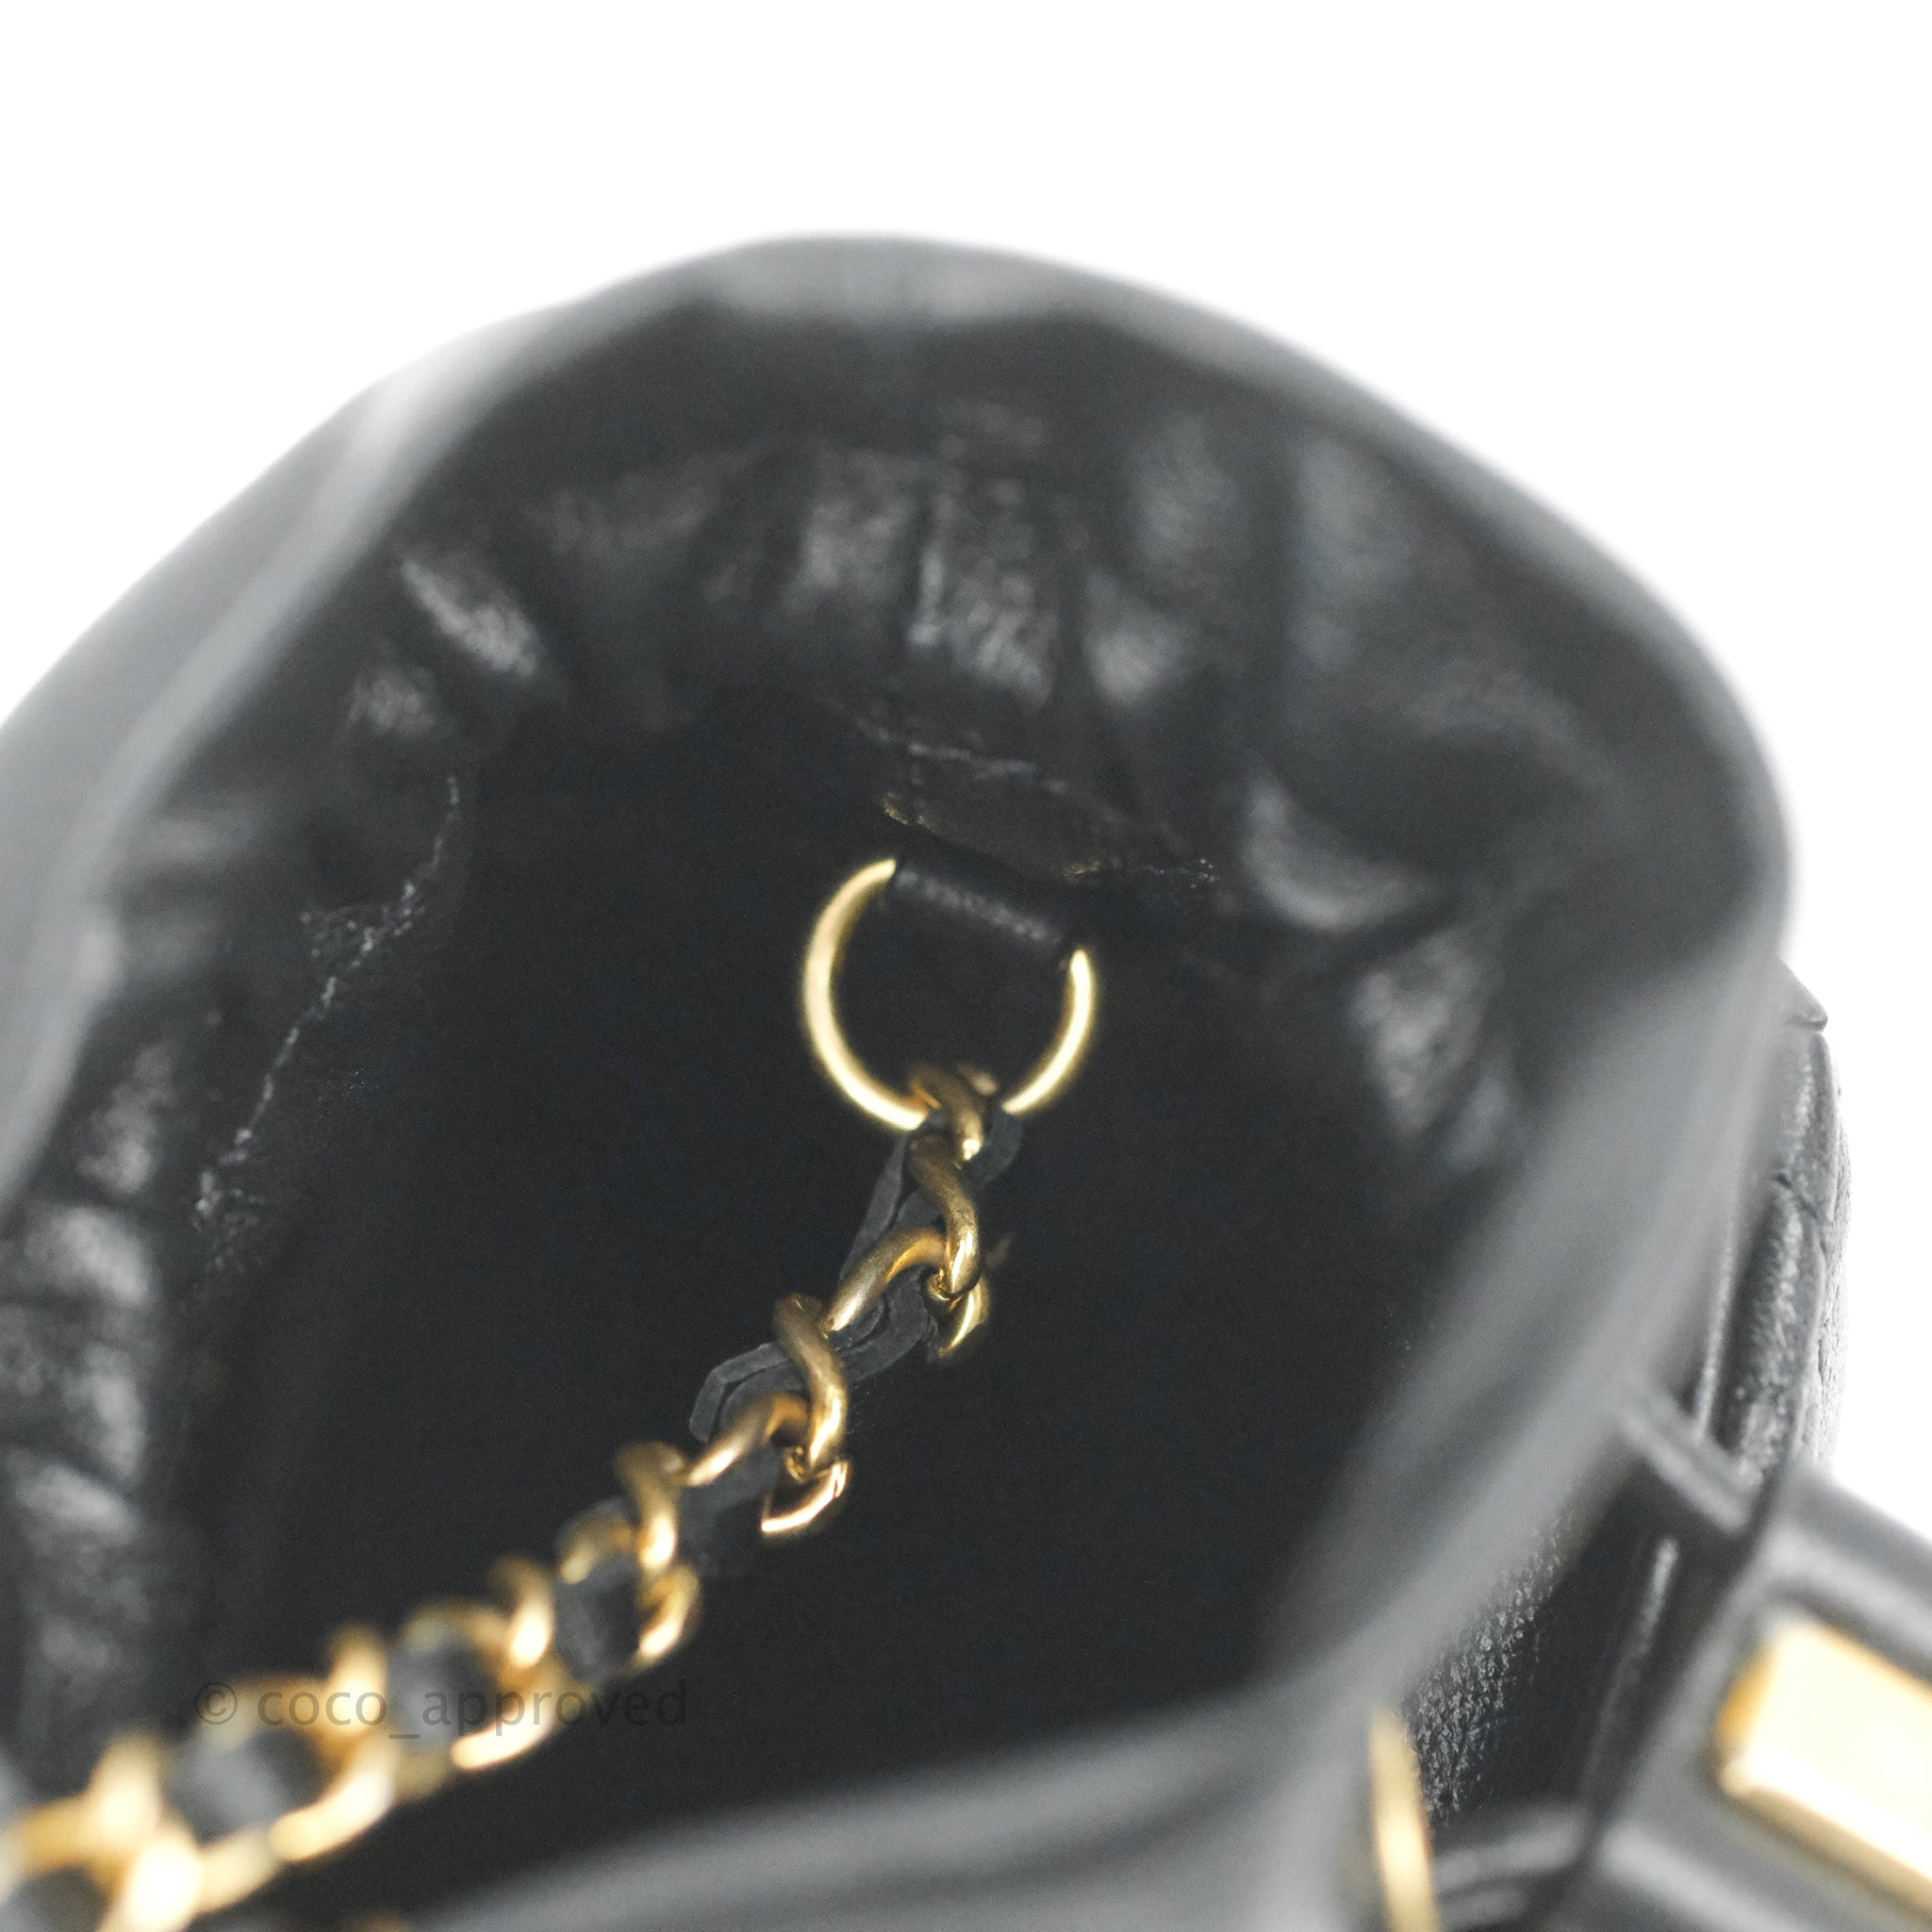 Chanel Drawstring Bucket Bag Red Calfskin Gold Hardware 20S – Coco